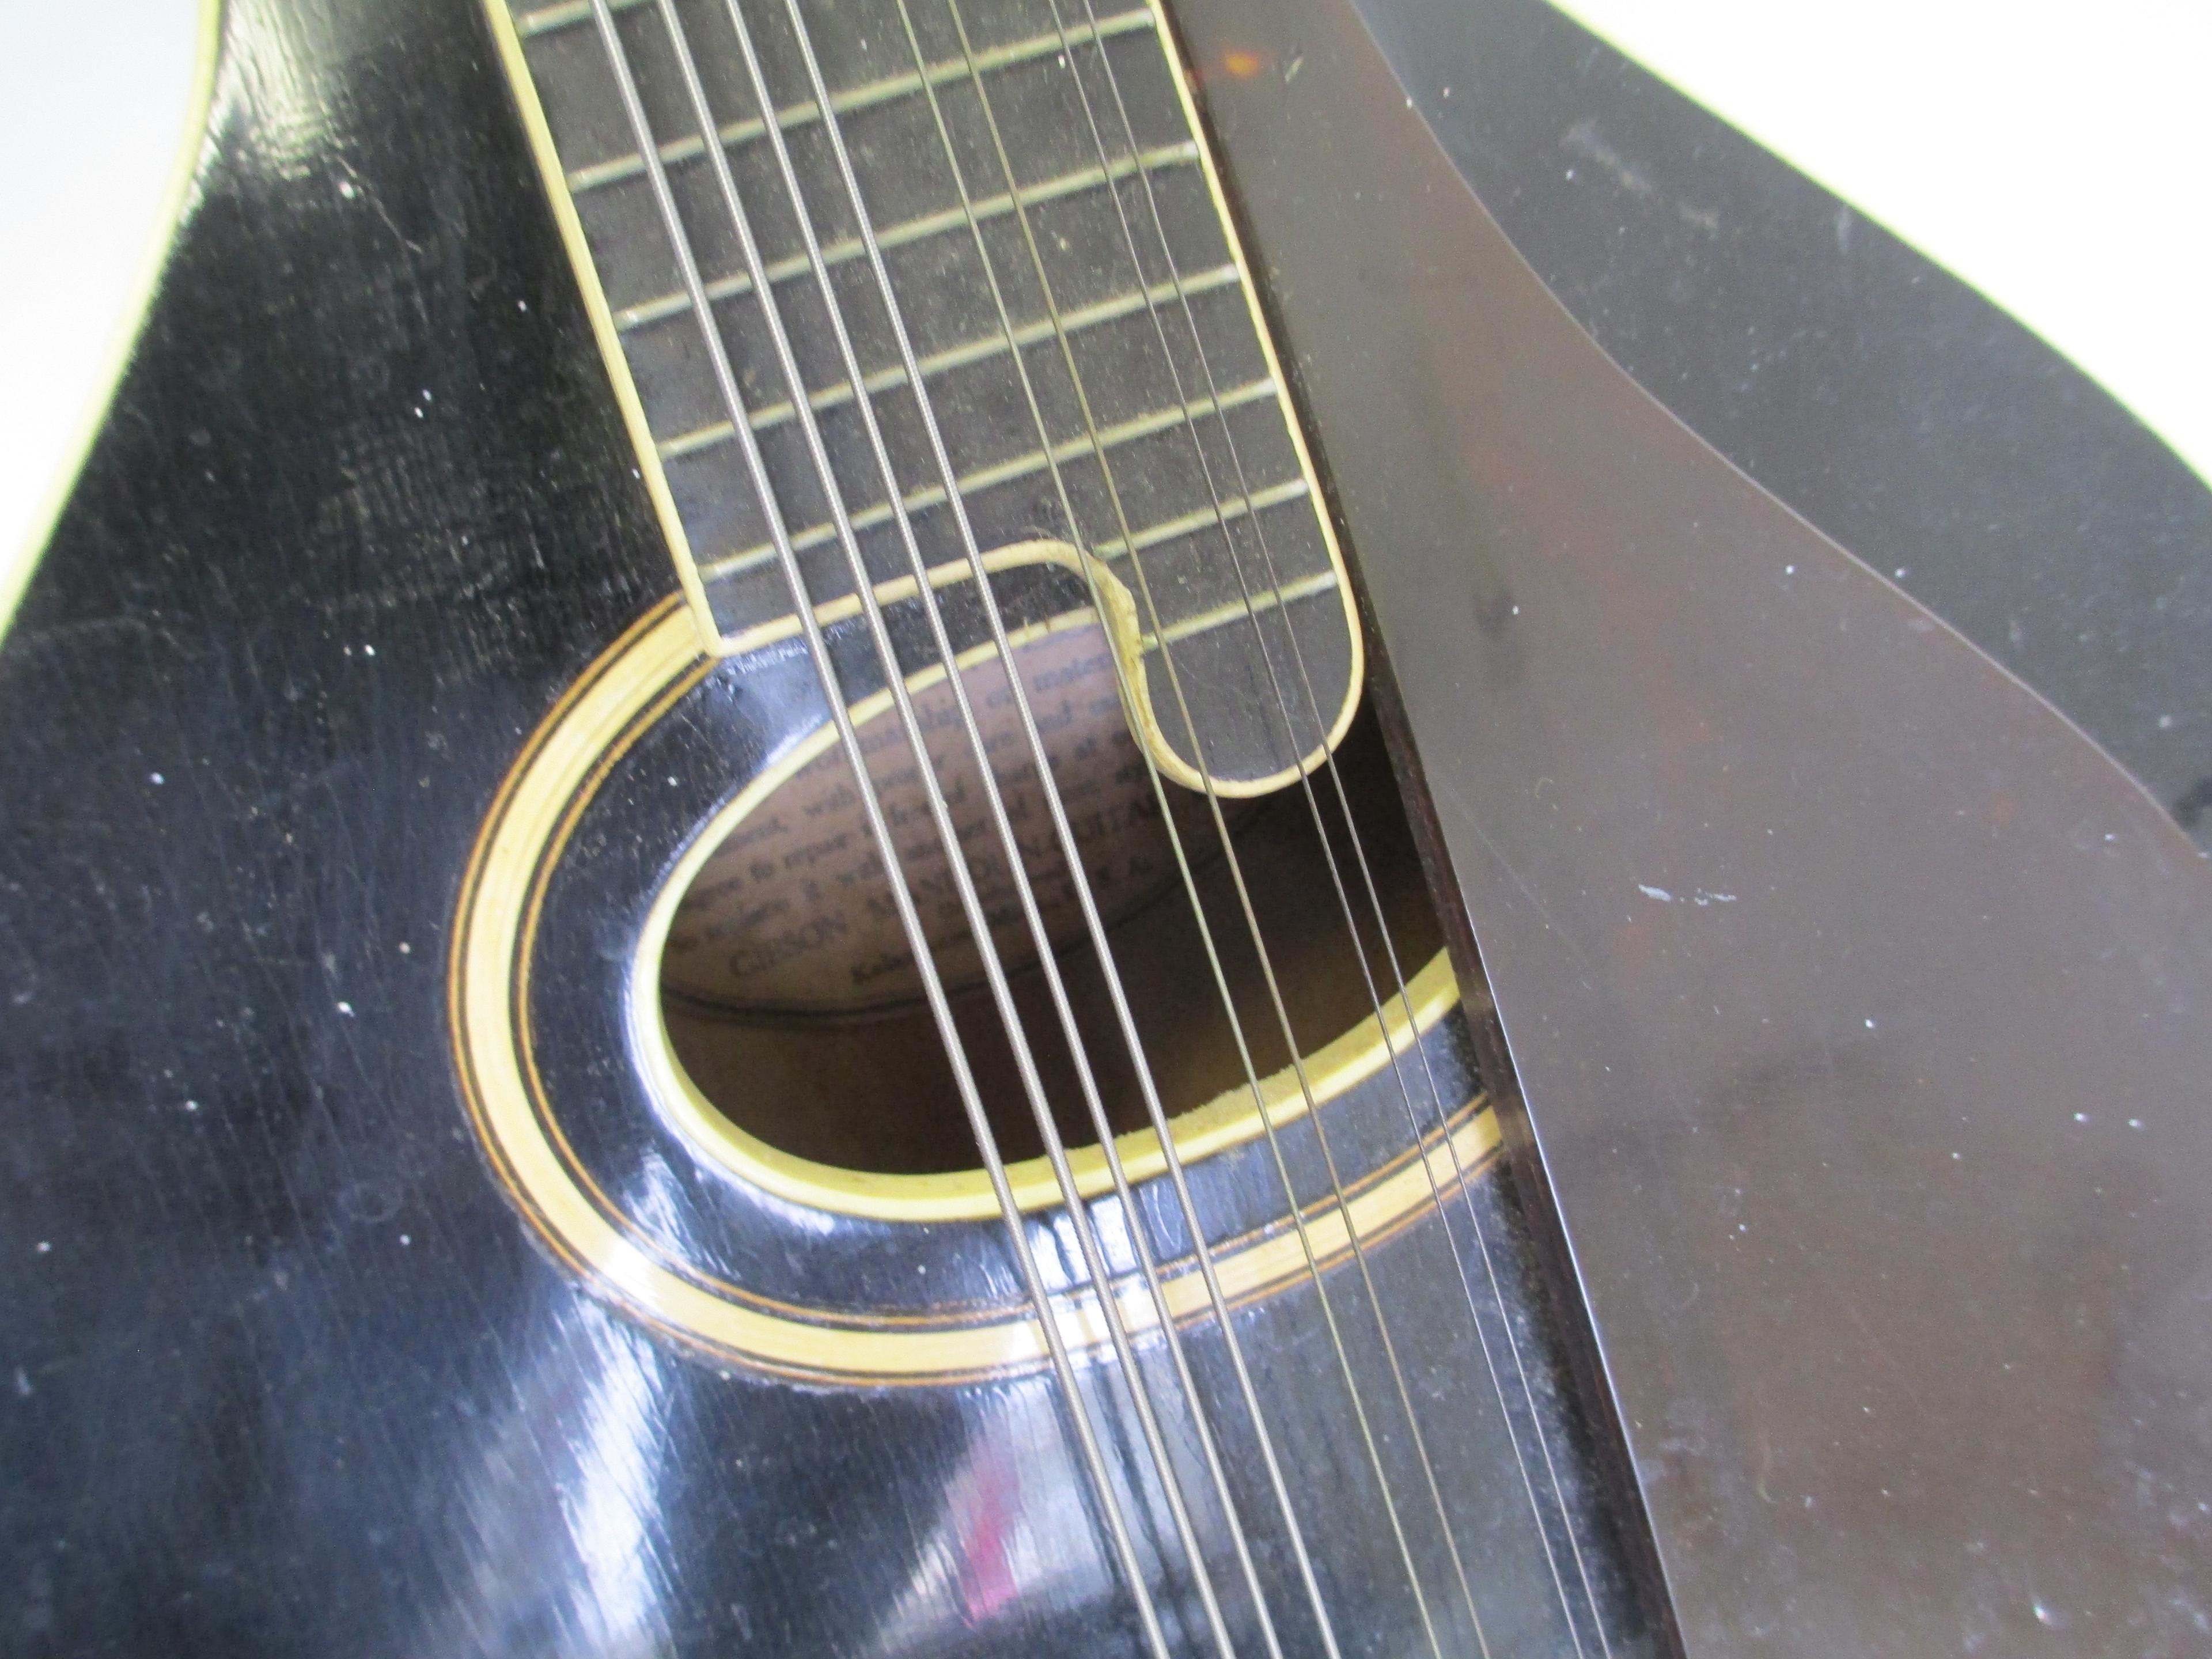 The Gibson Mandola Style HI  with original case